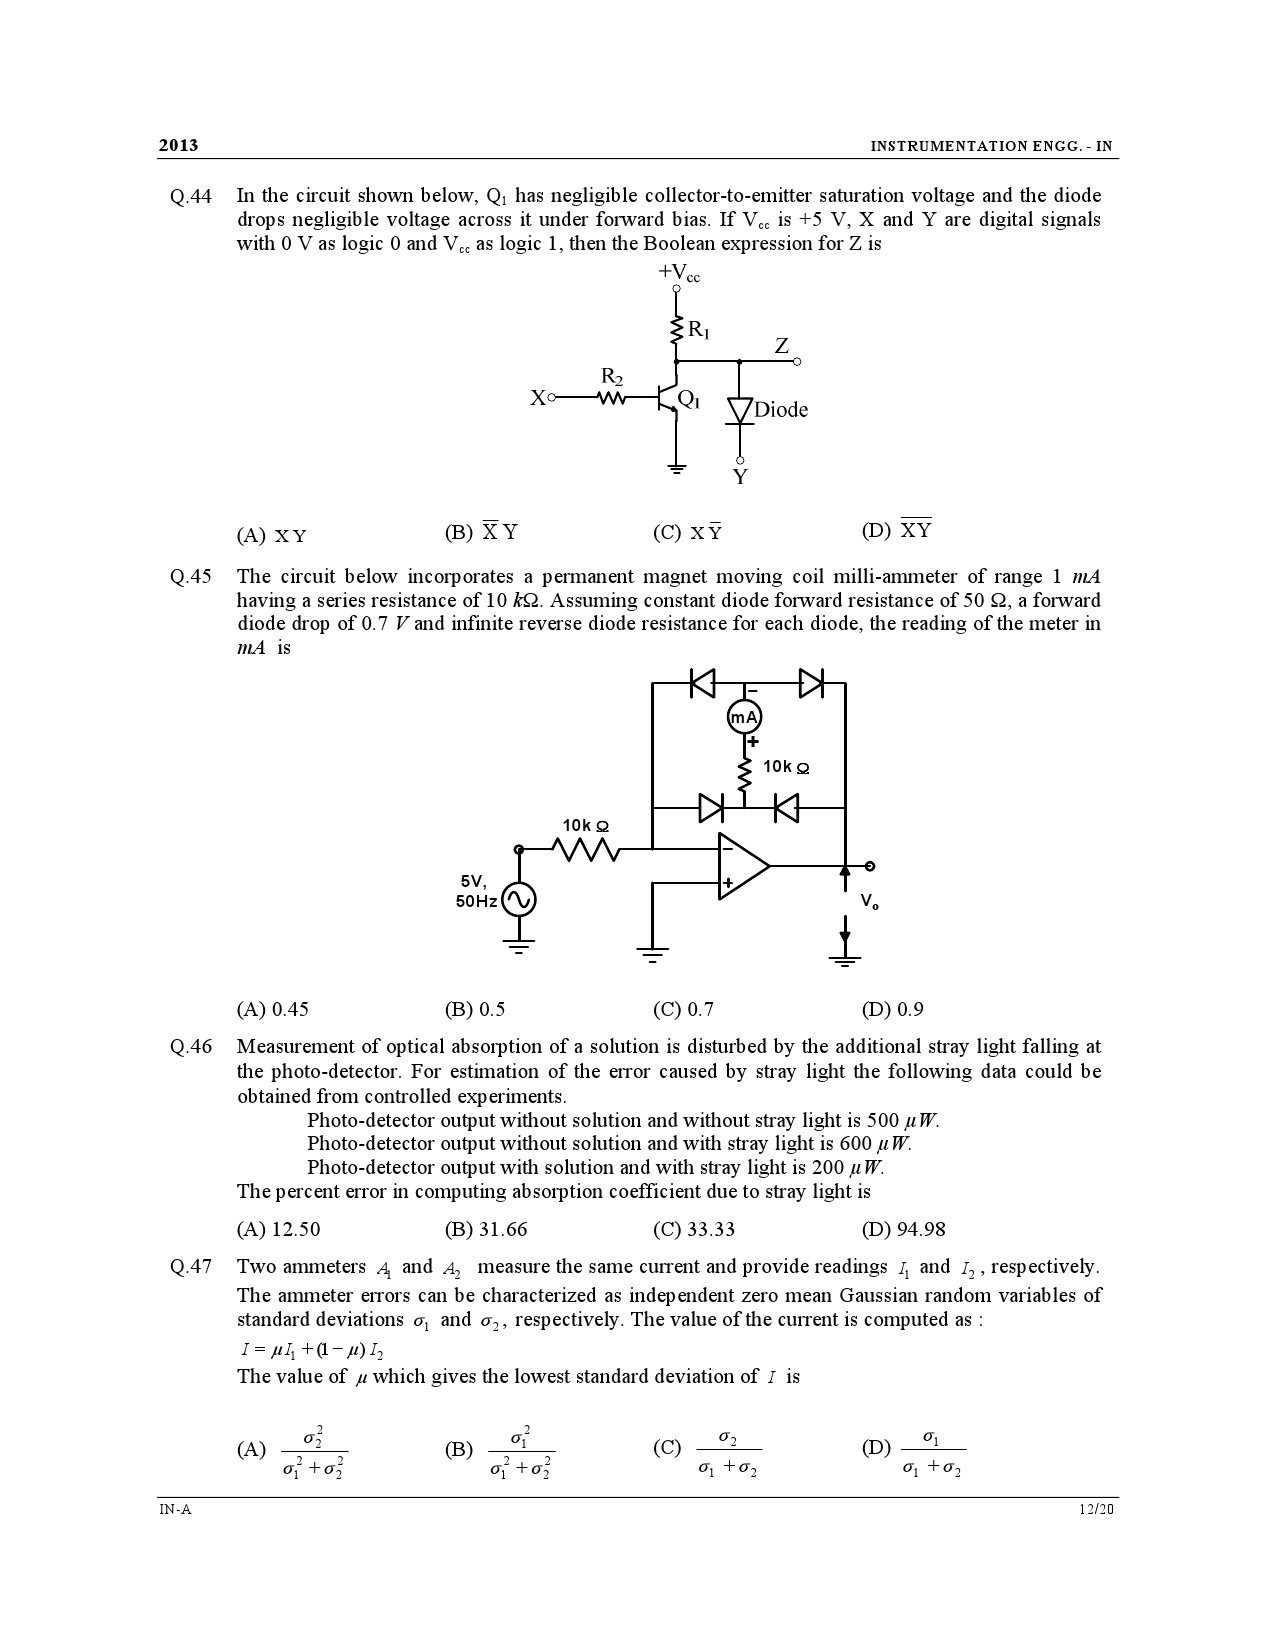 GATE Exam Question Paper 2013 Instrumentation Engineering 12